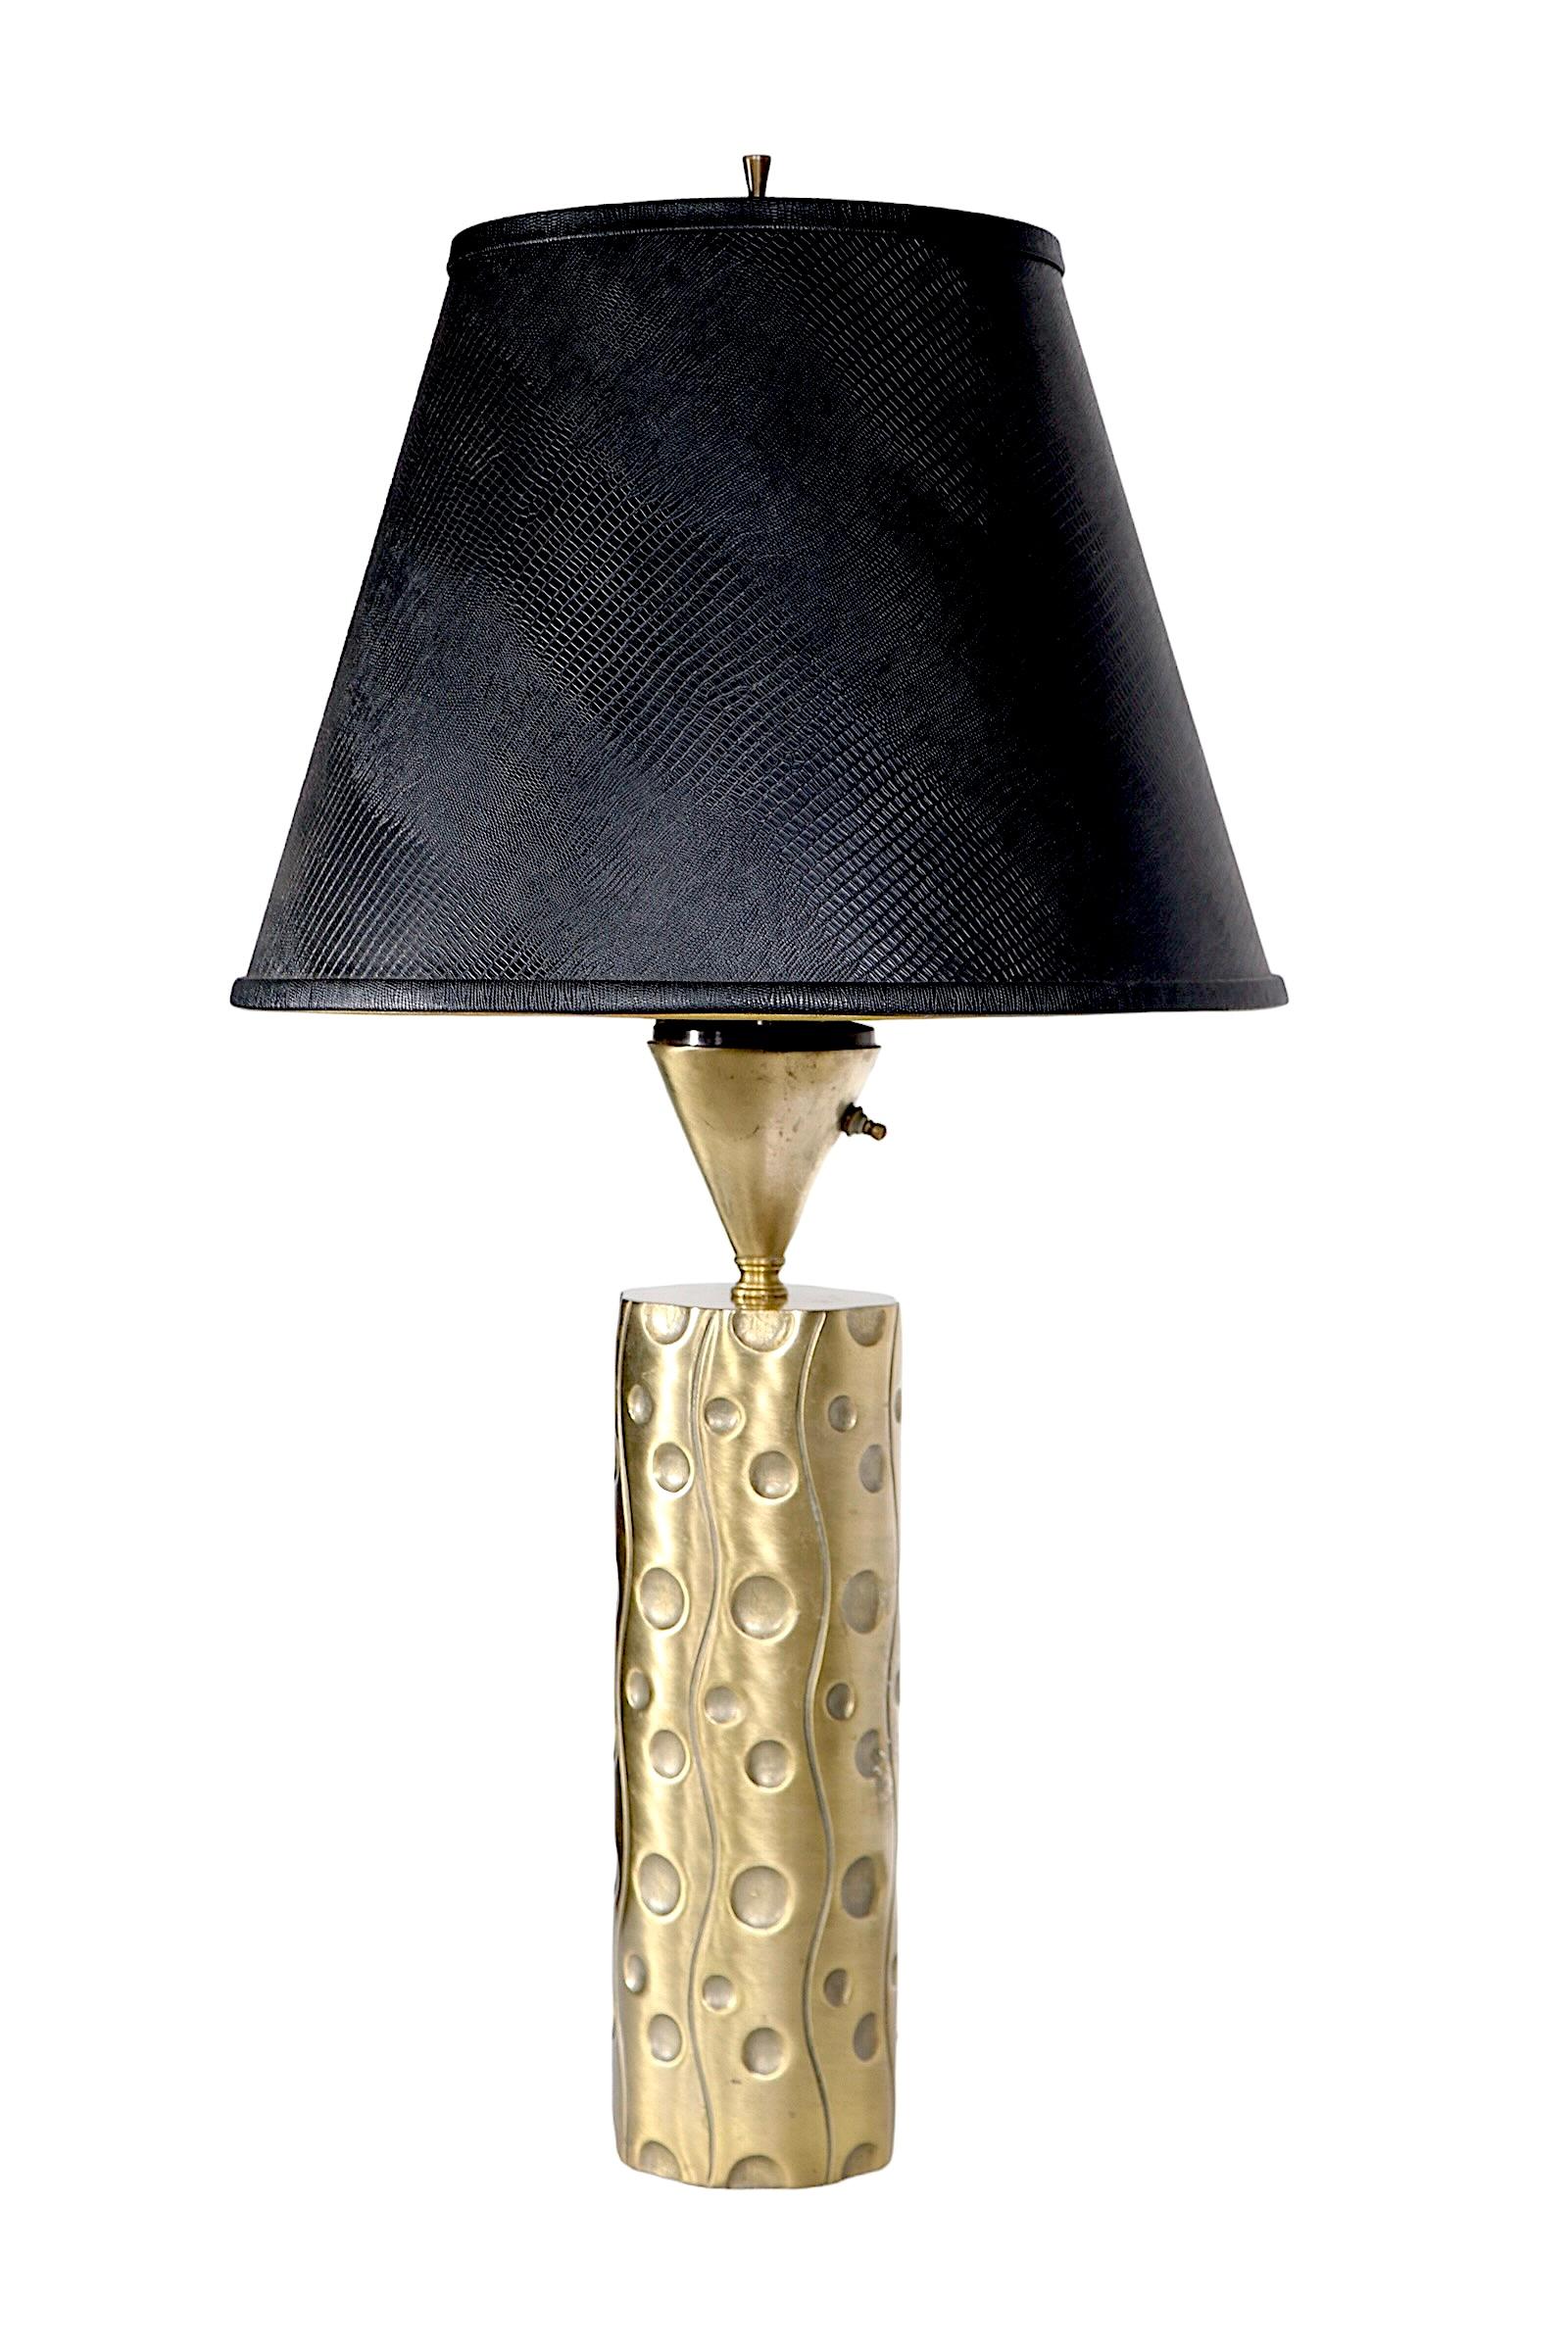  Westwood Table Lamp att. Tony Paul c. 1950/1970's  For Sale 1